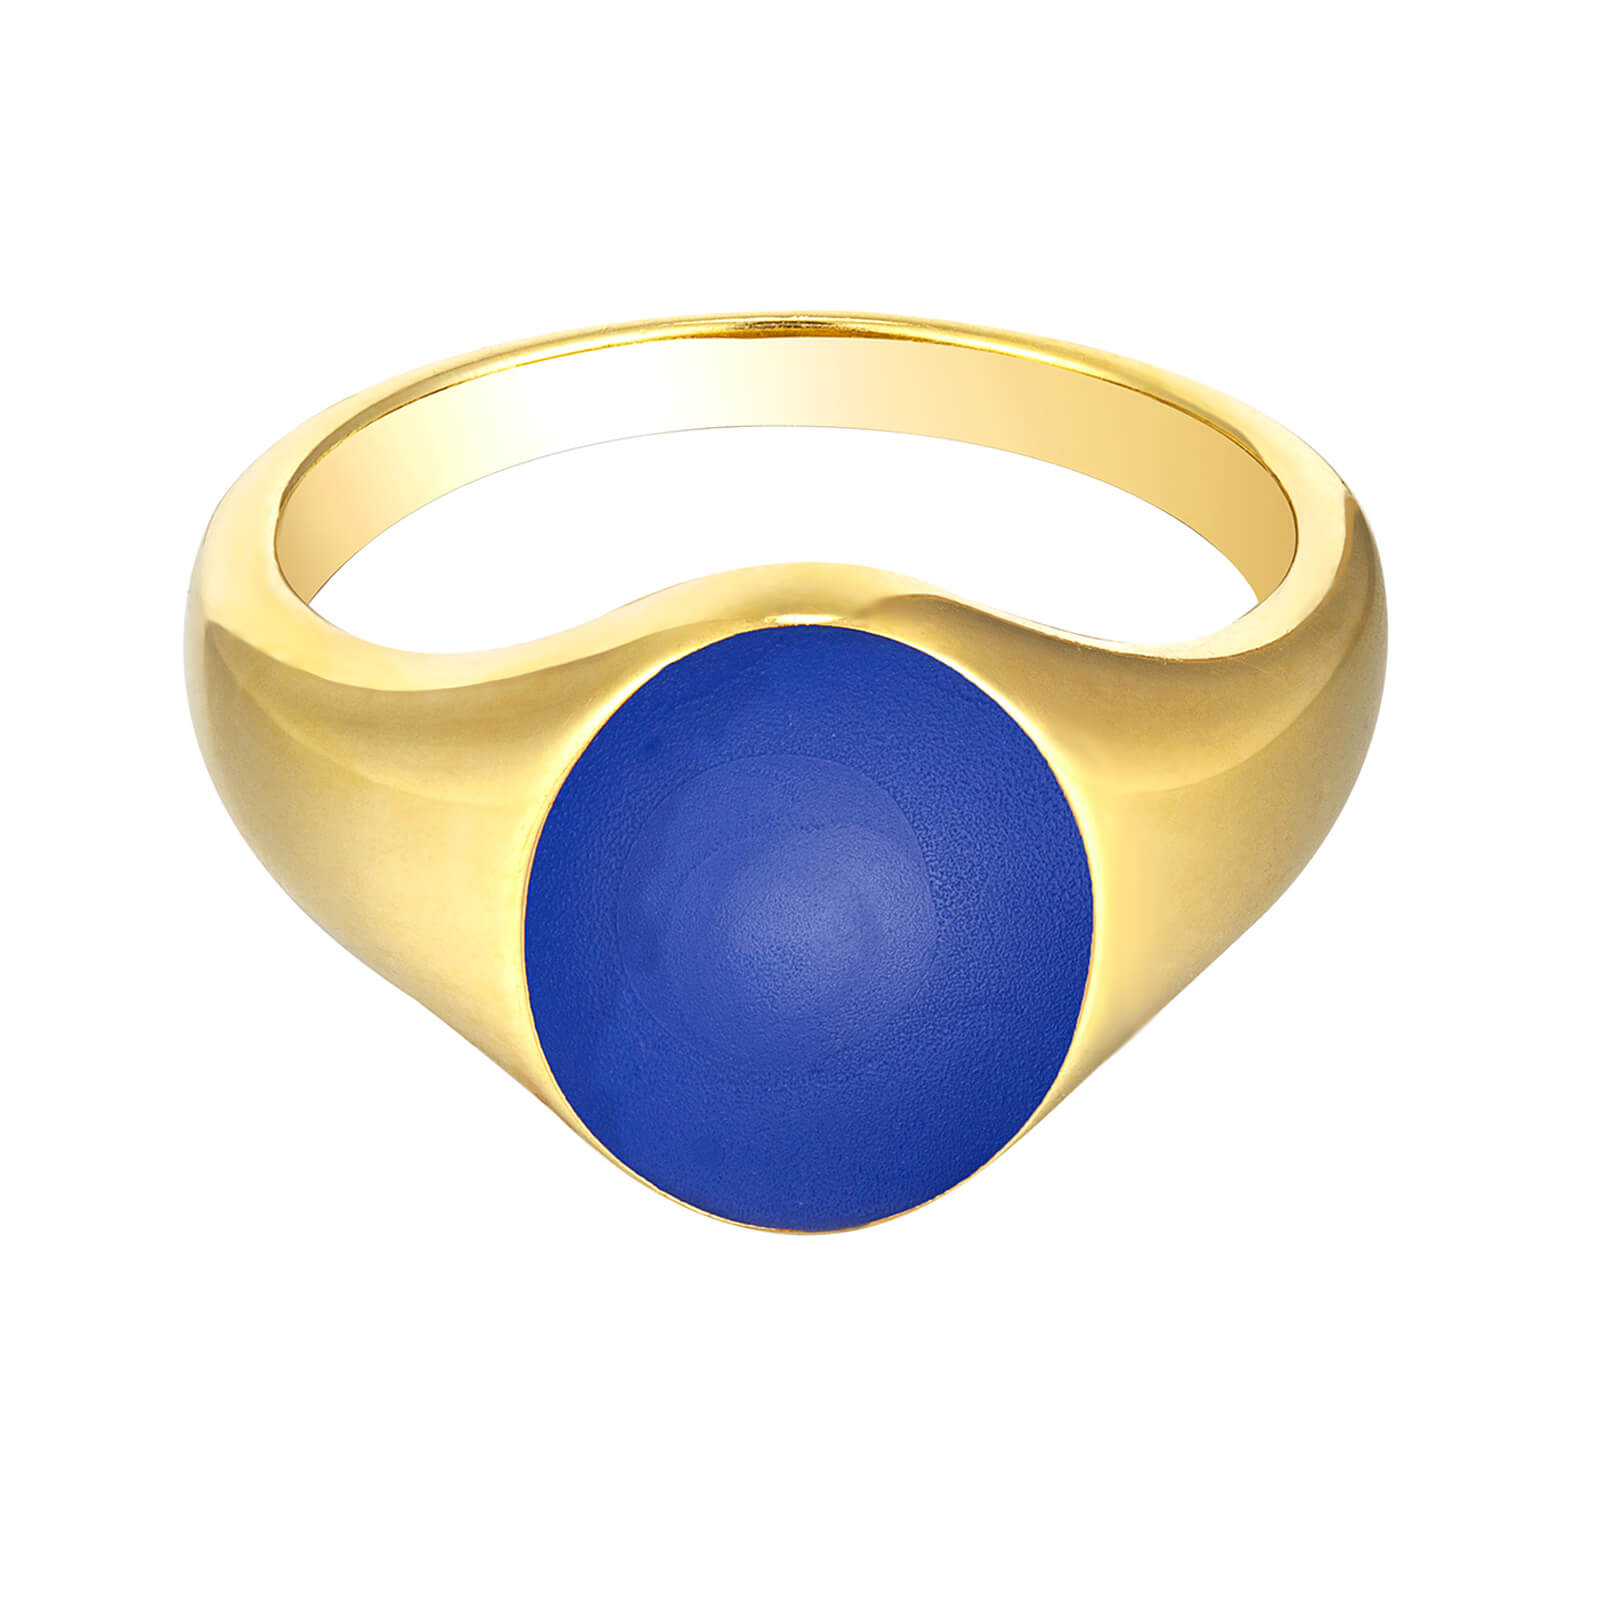 18ct Gold Vermeil Bespoke Royal Blue Enamel Signet Ring